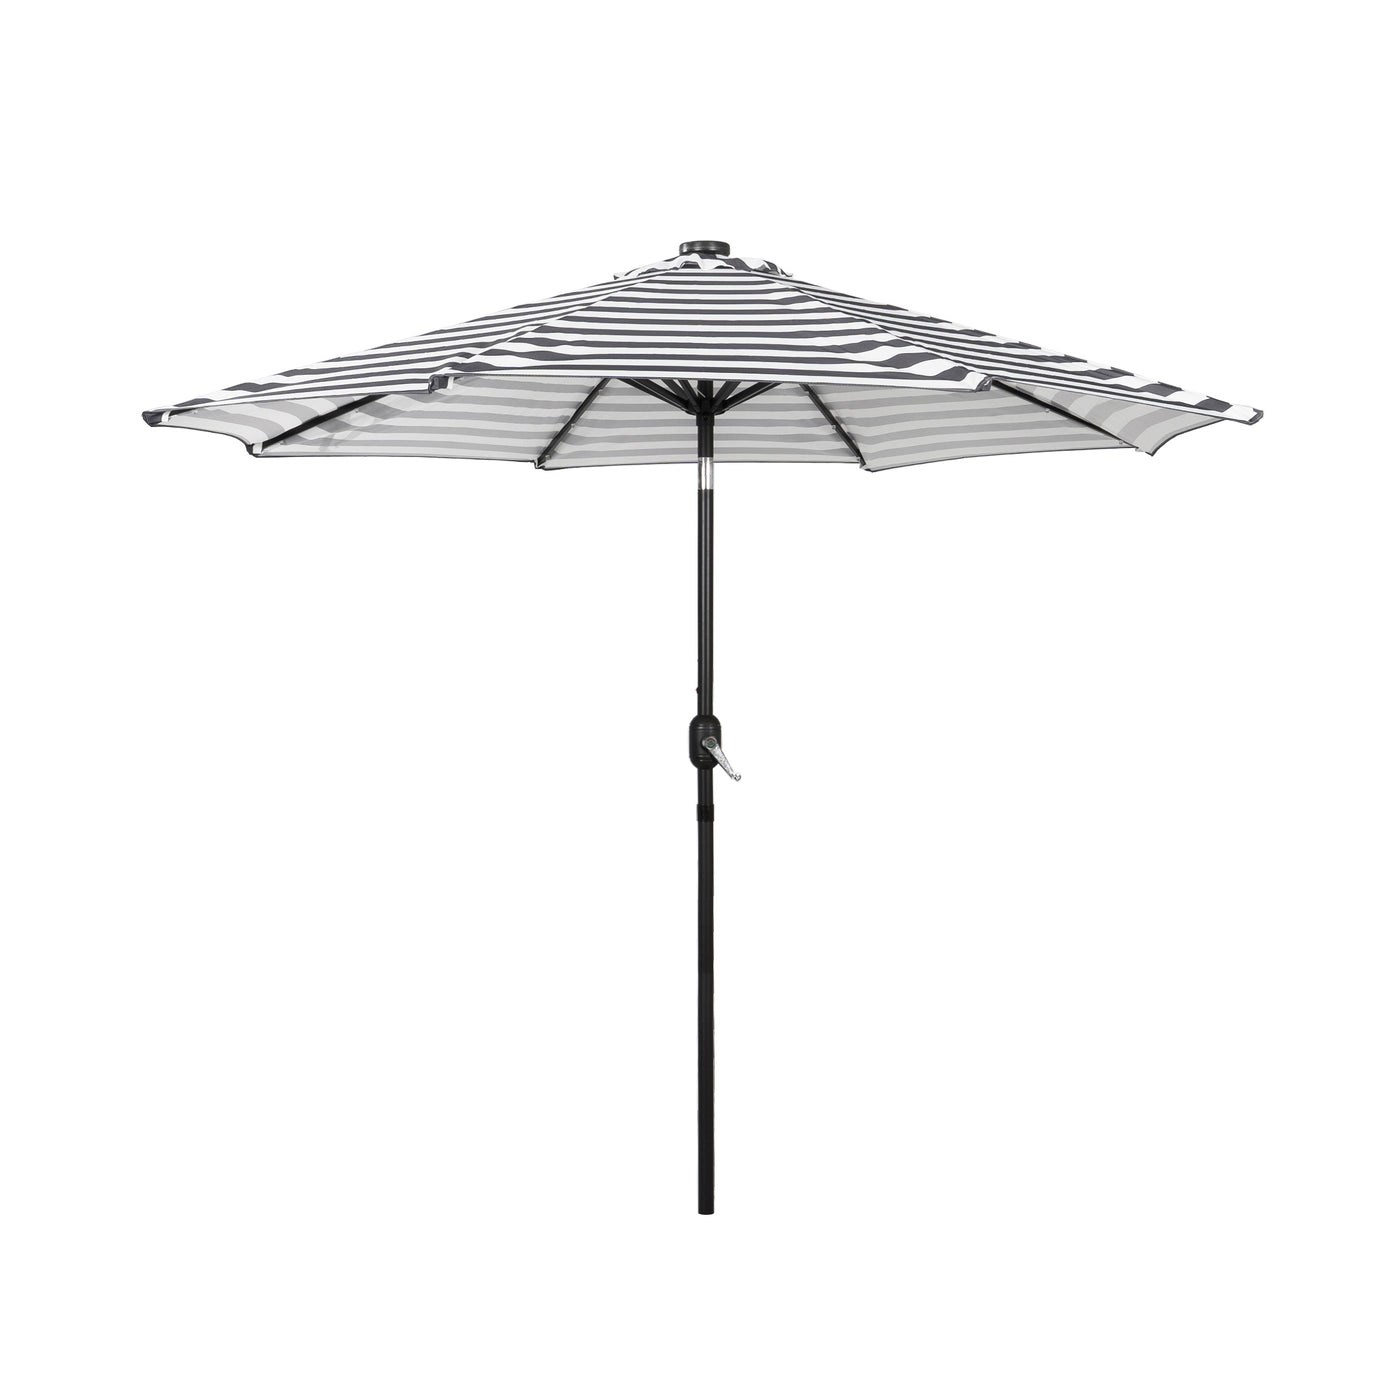 Cyrus 9 ft. Patio Solar Power LED Market Umbrella with Round Bronze Base